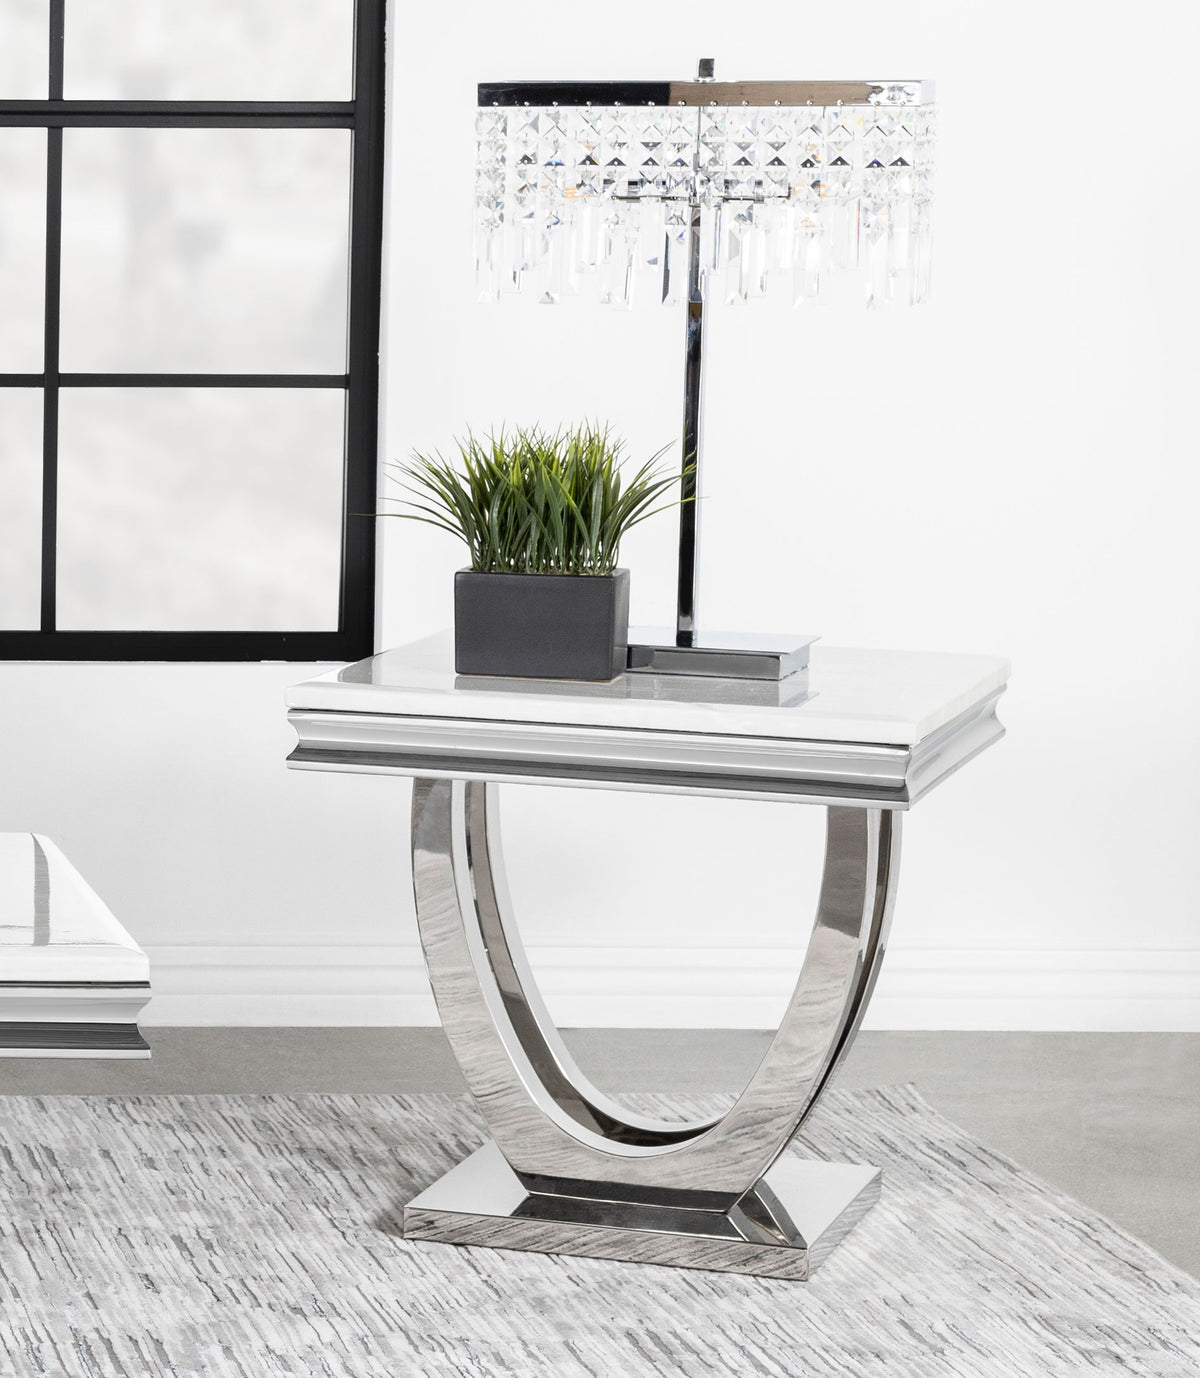 Kerwin U-base Square End Table White and Chrome - Half Price Furniture